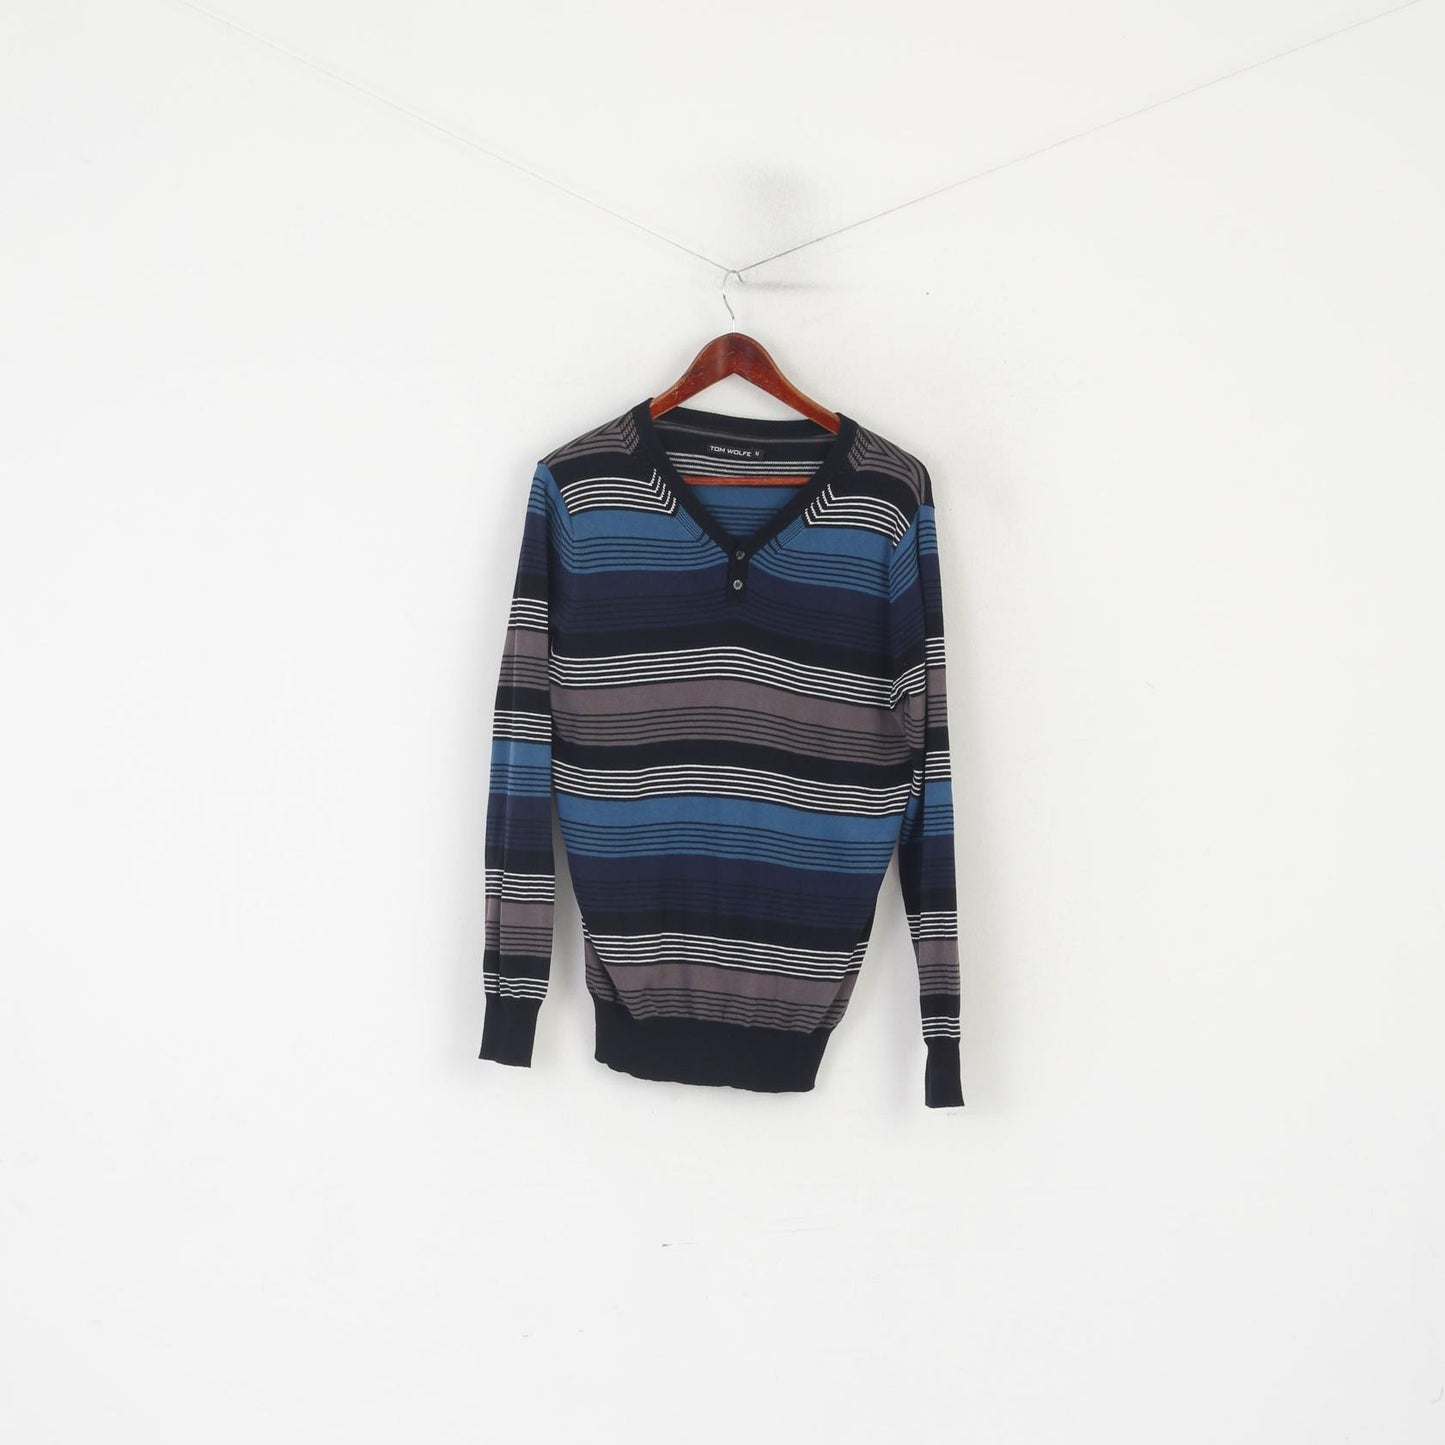 Tom Wolfe Men M Jumper Black Blue Striped Cotton Neck Stretch Sweater